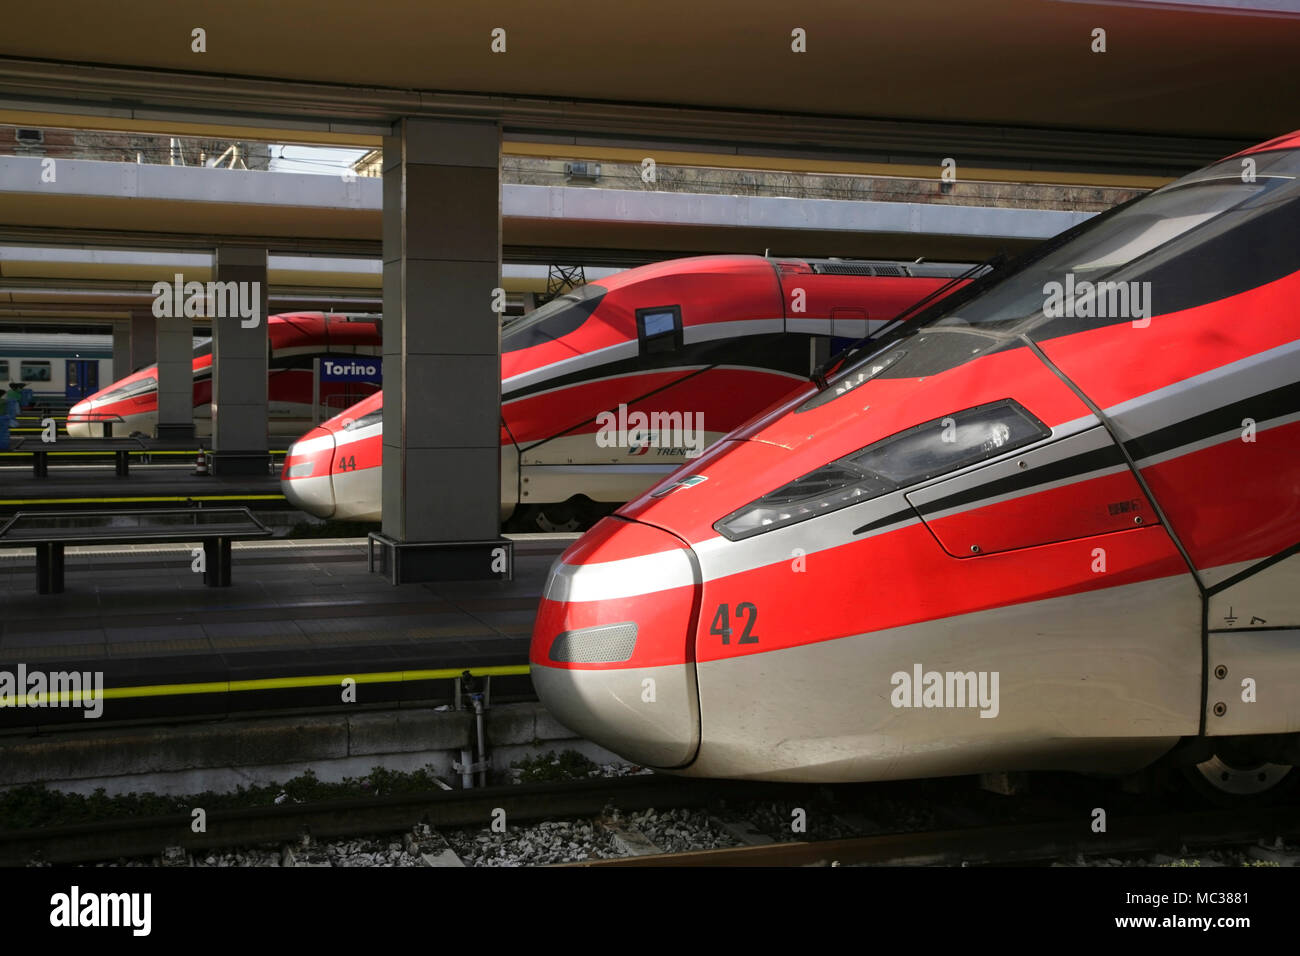 Frecciarossa 1000 (ETR 400) 400kph high speed trains at Turin Porta Nuova railway station, Italy. Stock Photo